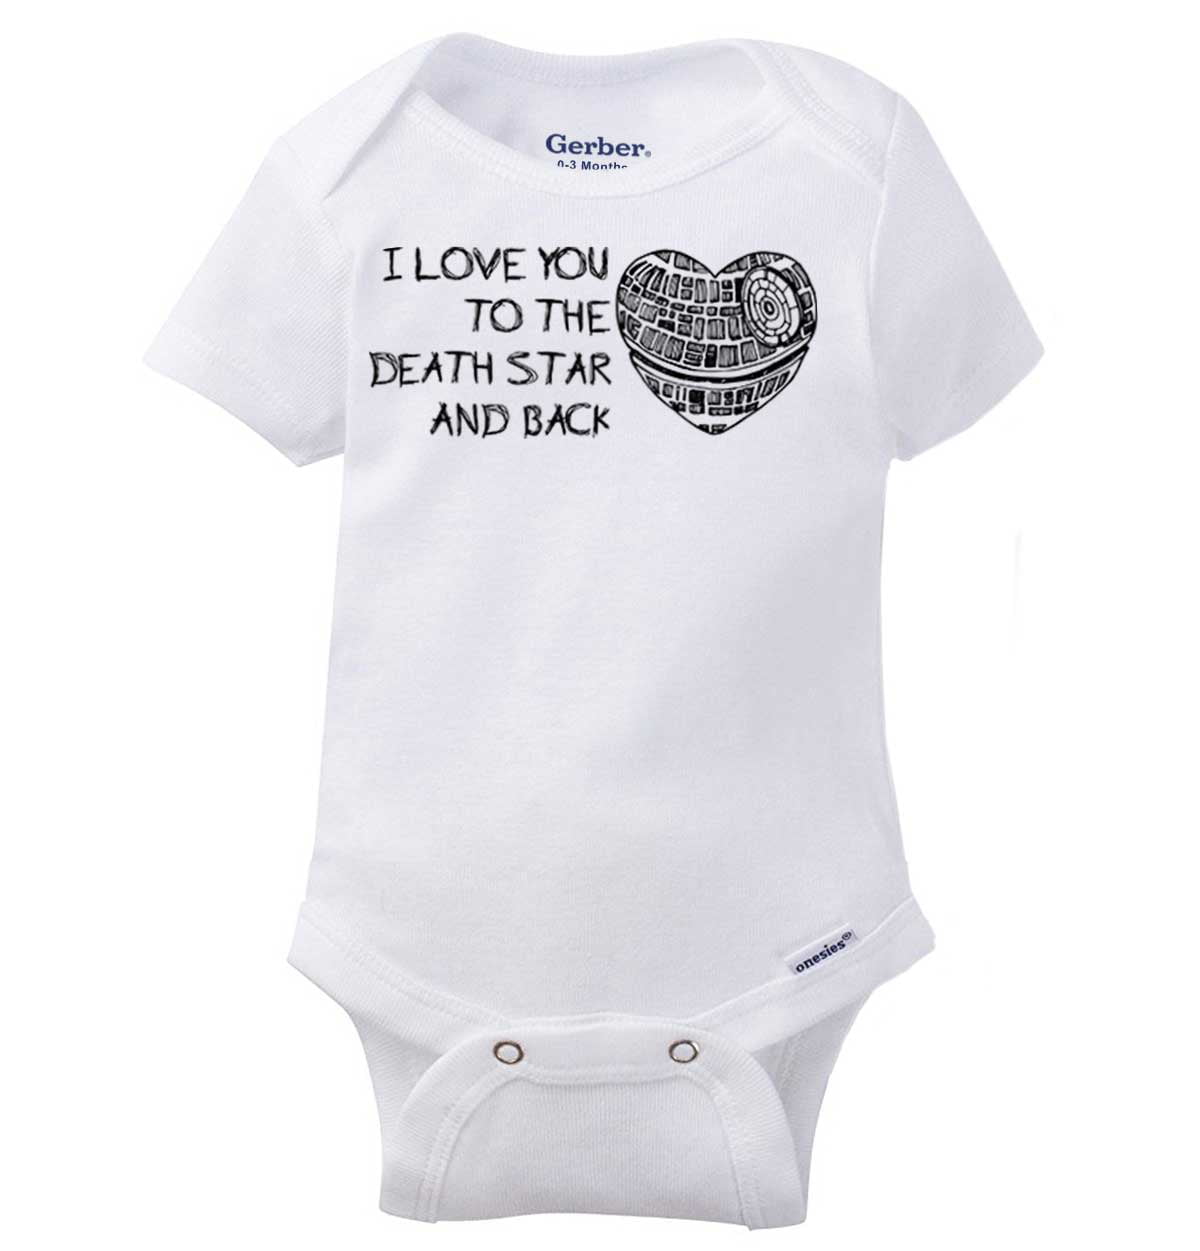 Gender Neutral Baby Bodysuits Funny Onesies Daddy Is My Super Hero Gerber Baby Onesie & Matching Bib Cute Baby Clothes